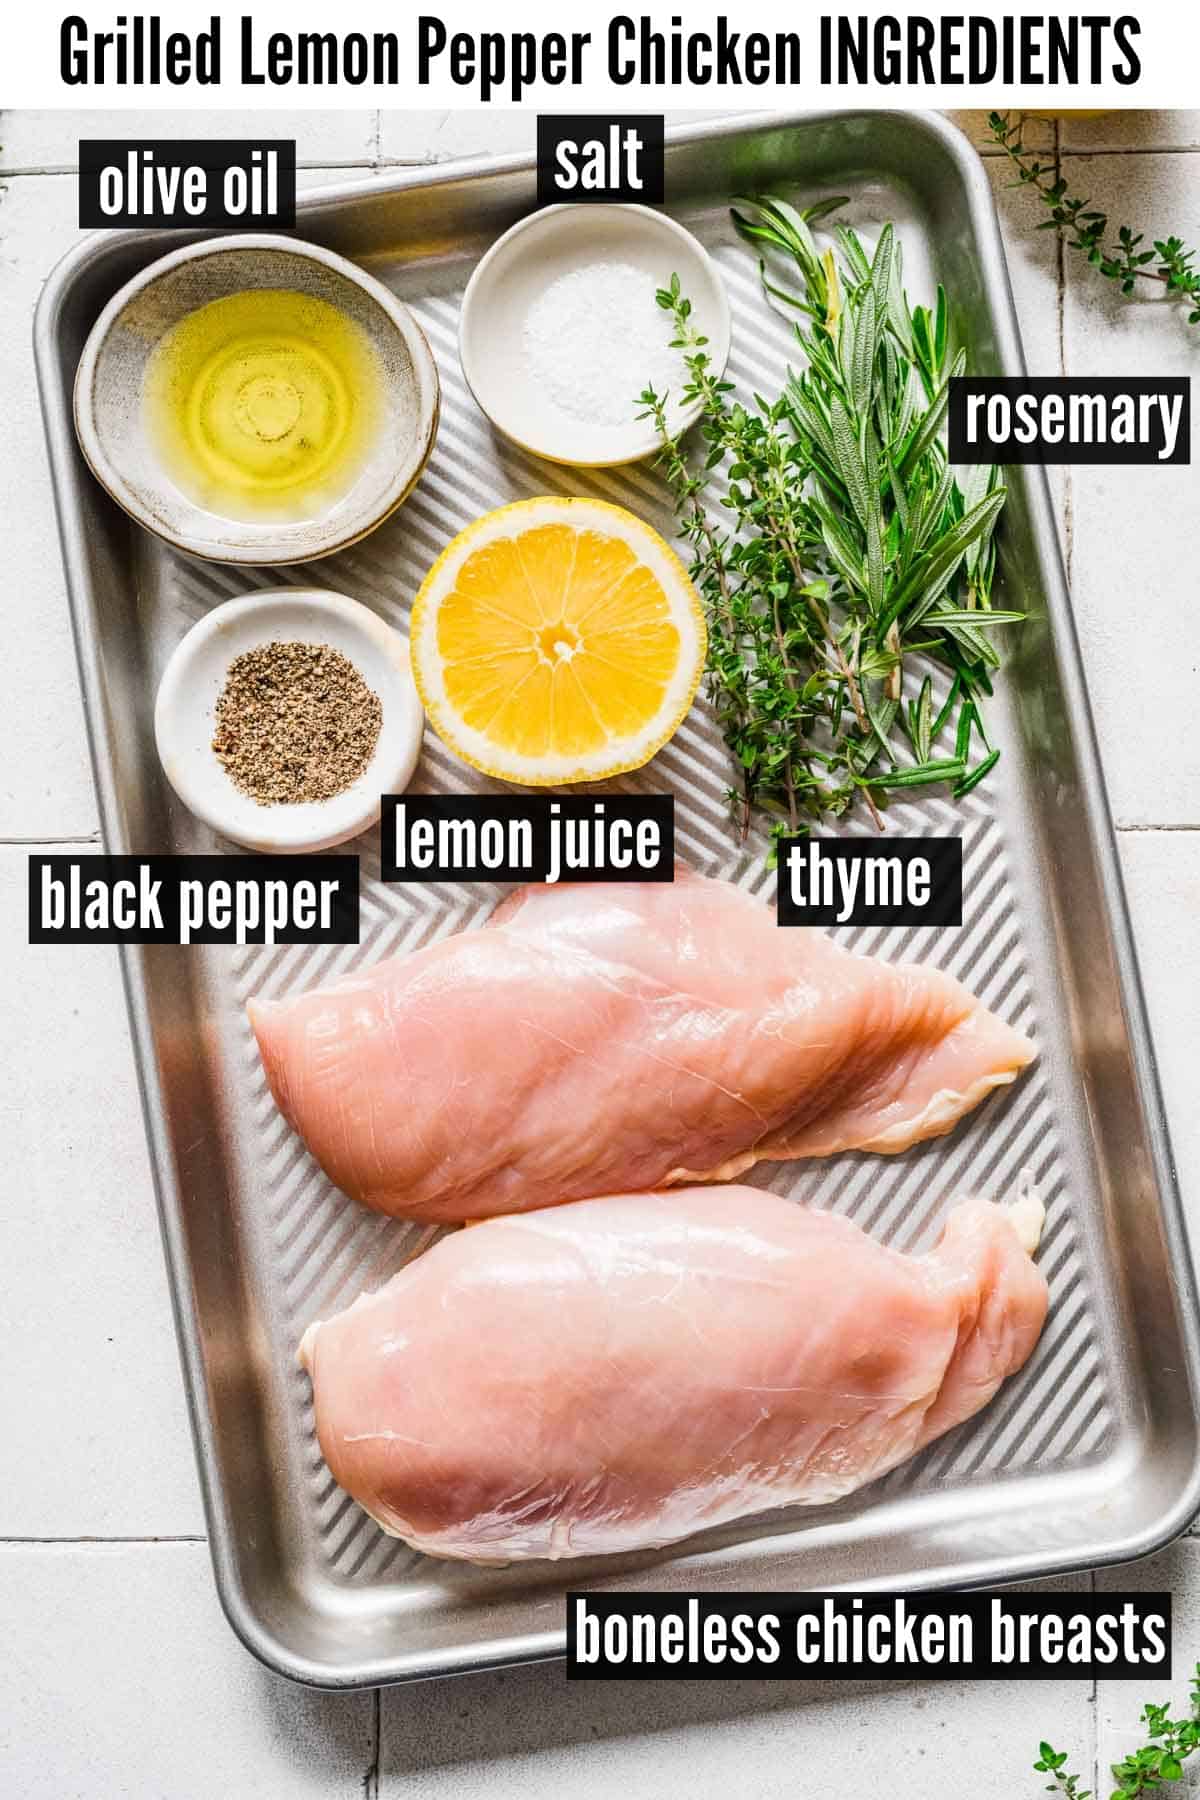 grilled lemon pepper chicken labelled ingredients.